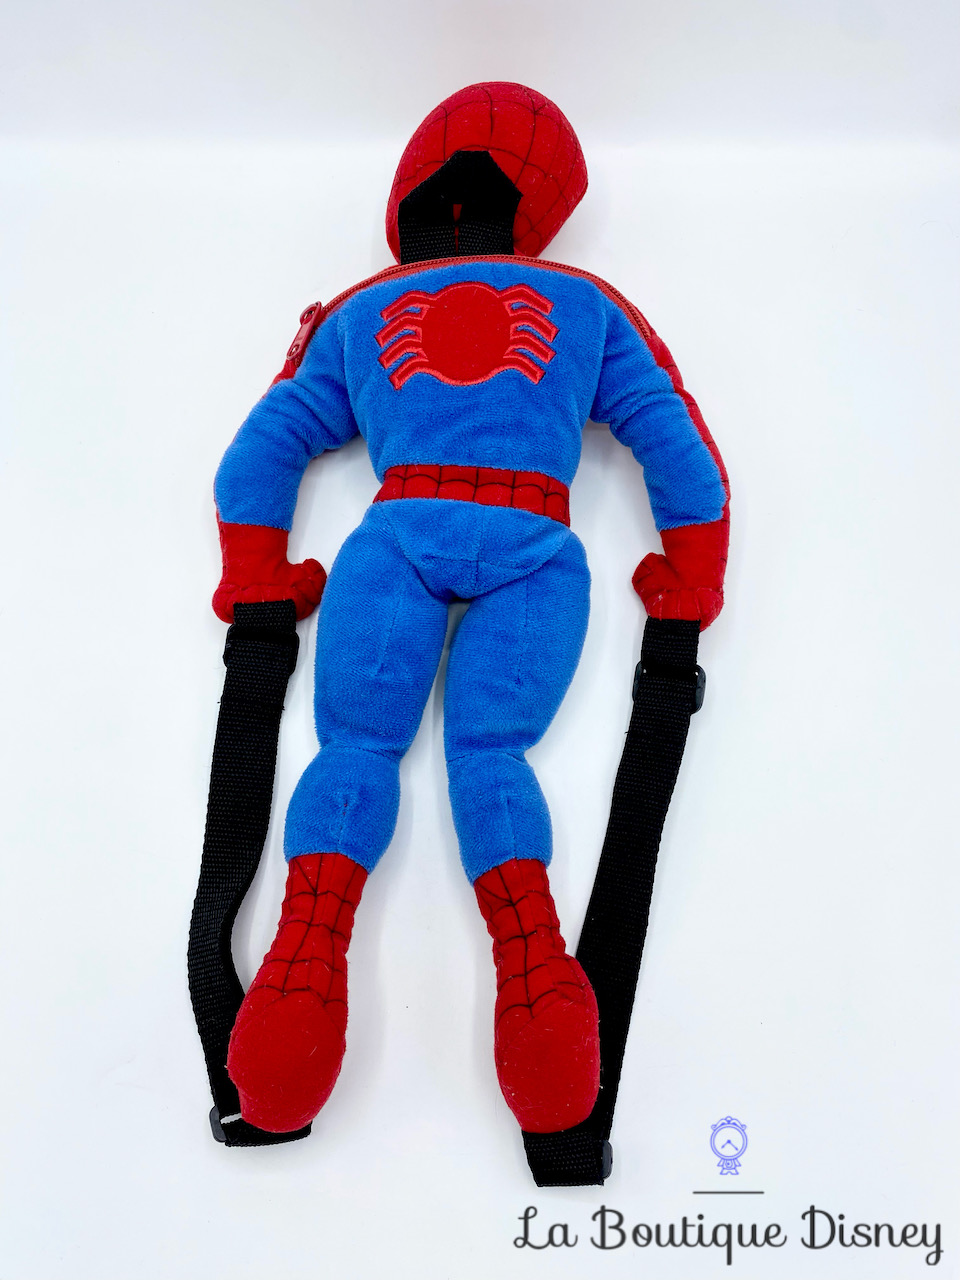 Sac a Dos Peluche Spiderman – Peluche géante